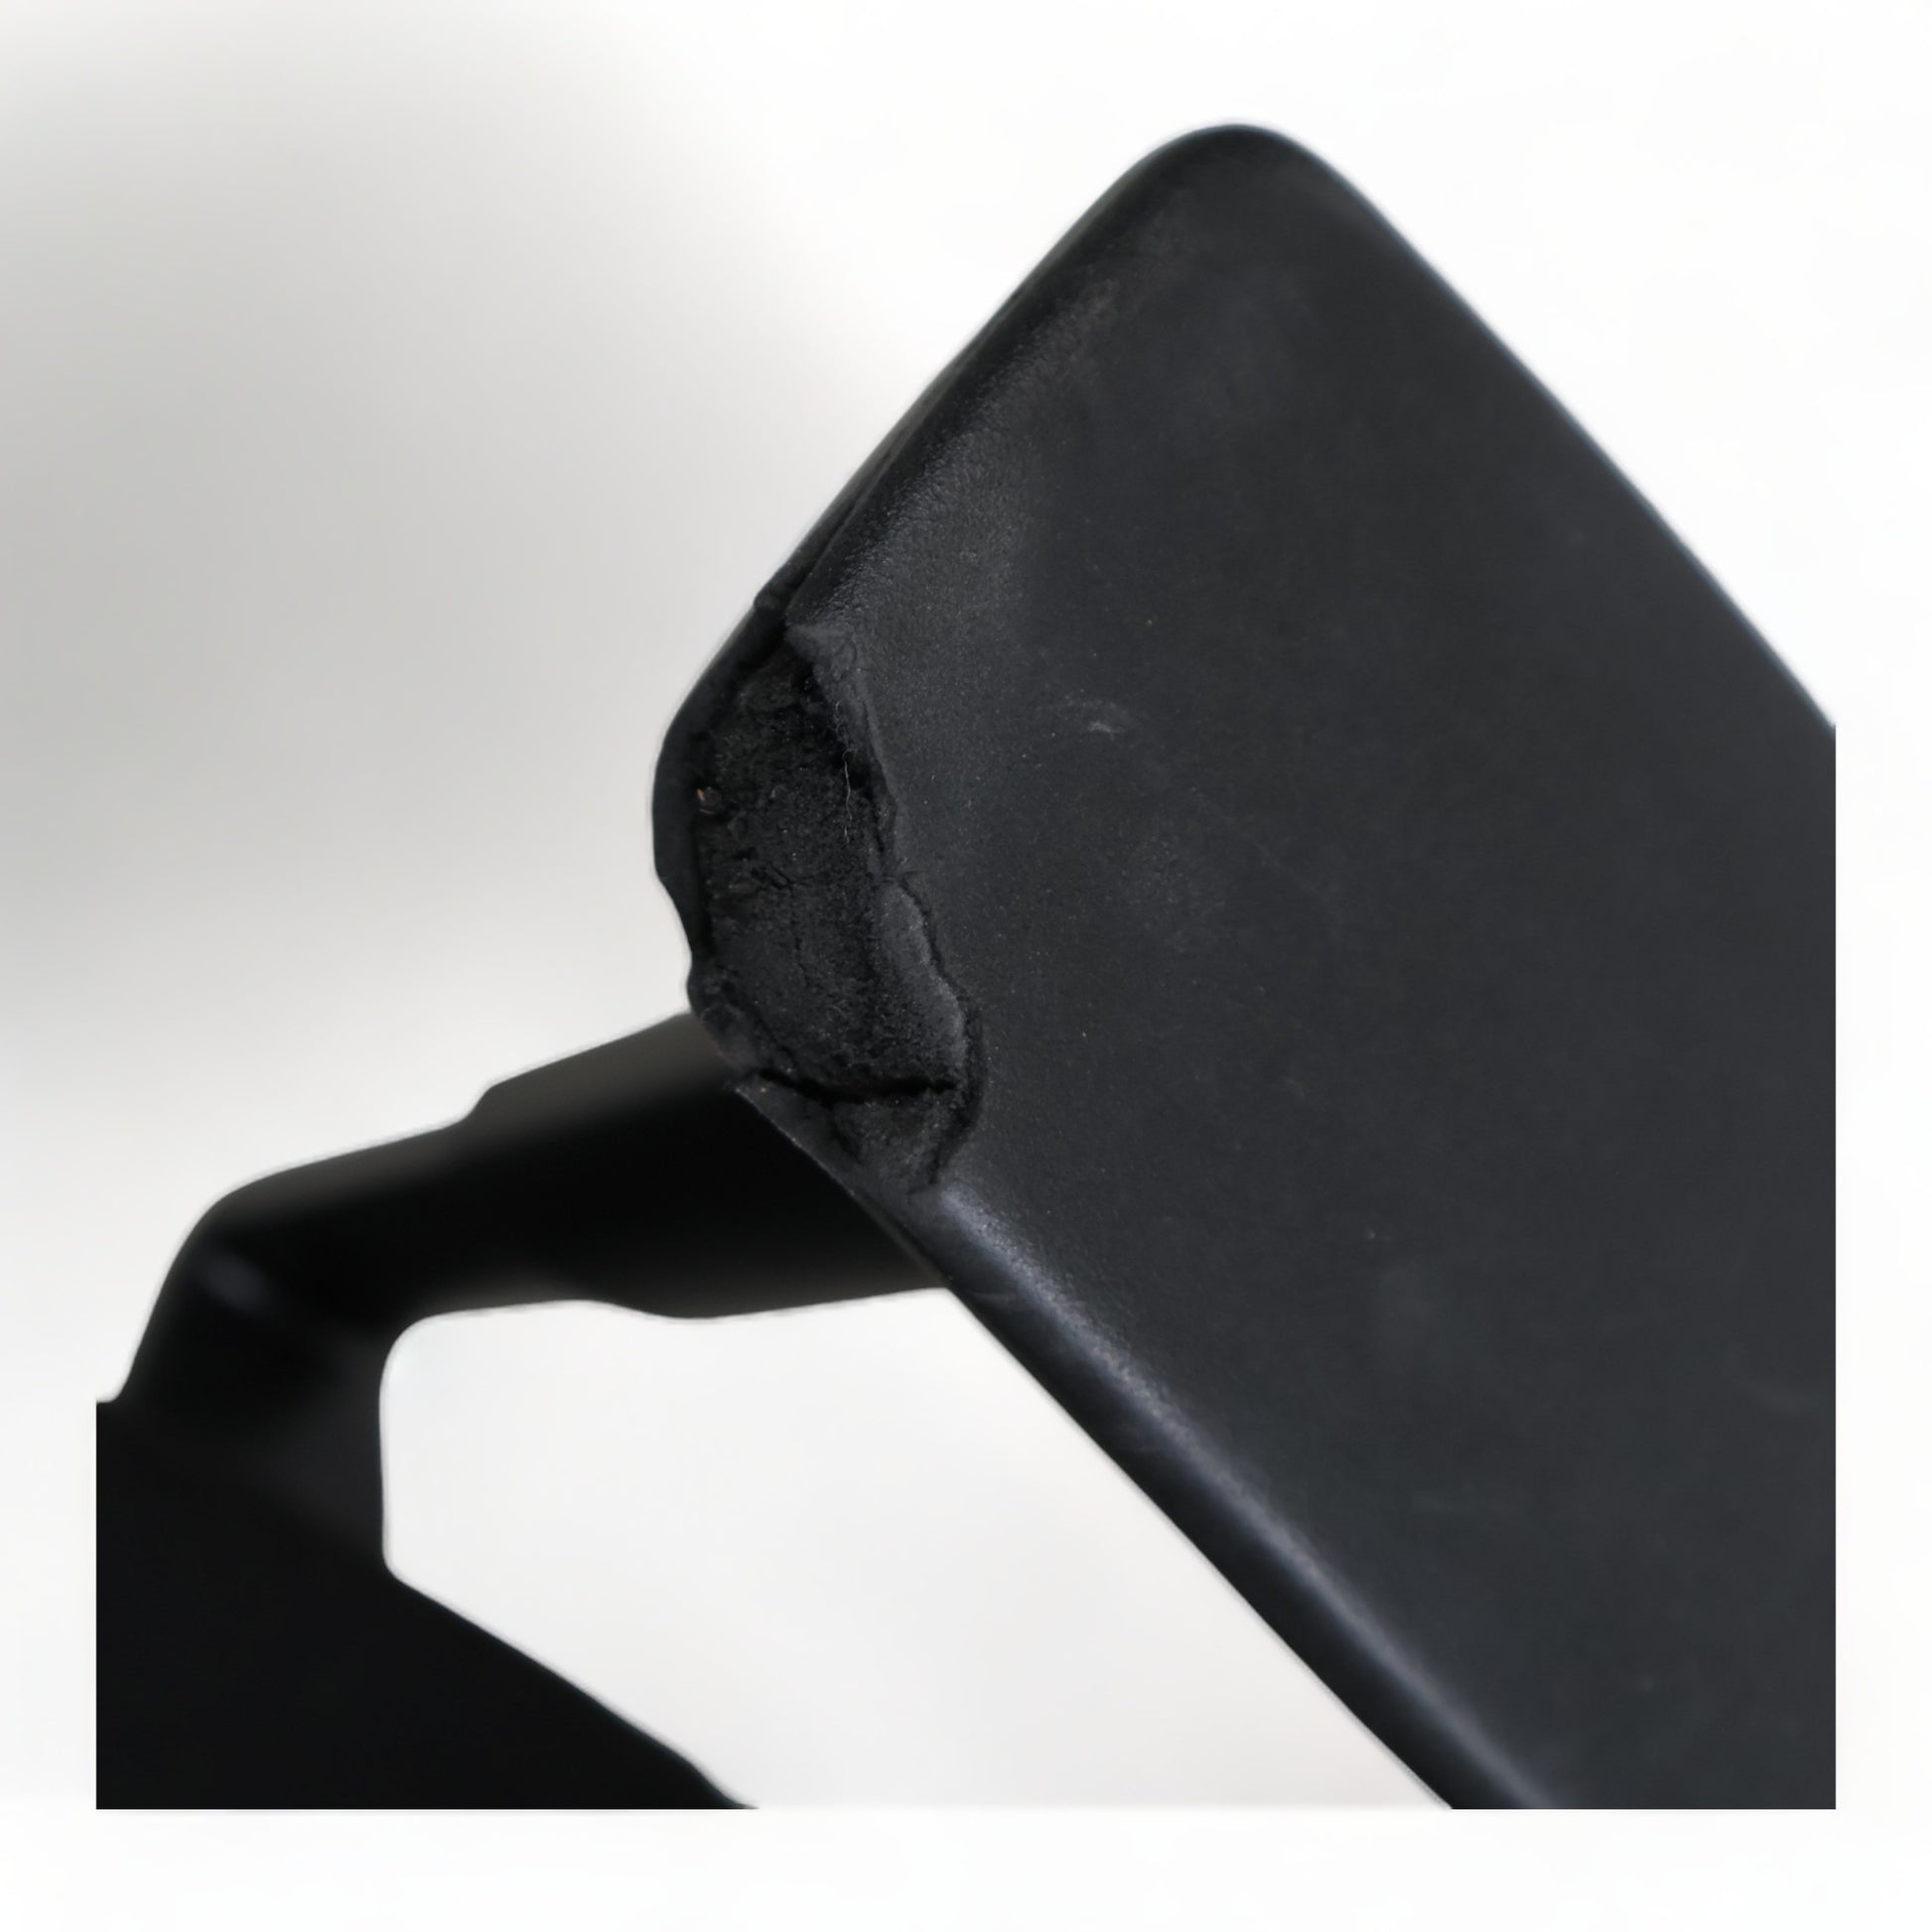 Nyrenset | Steelcase Think ergonomisk kontorstol - Secundo